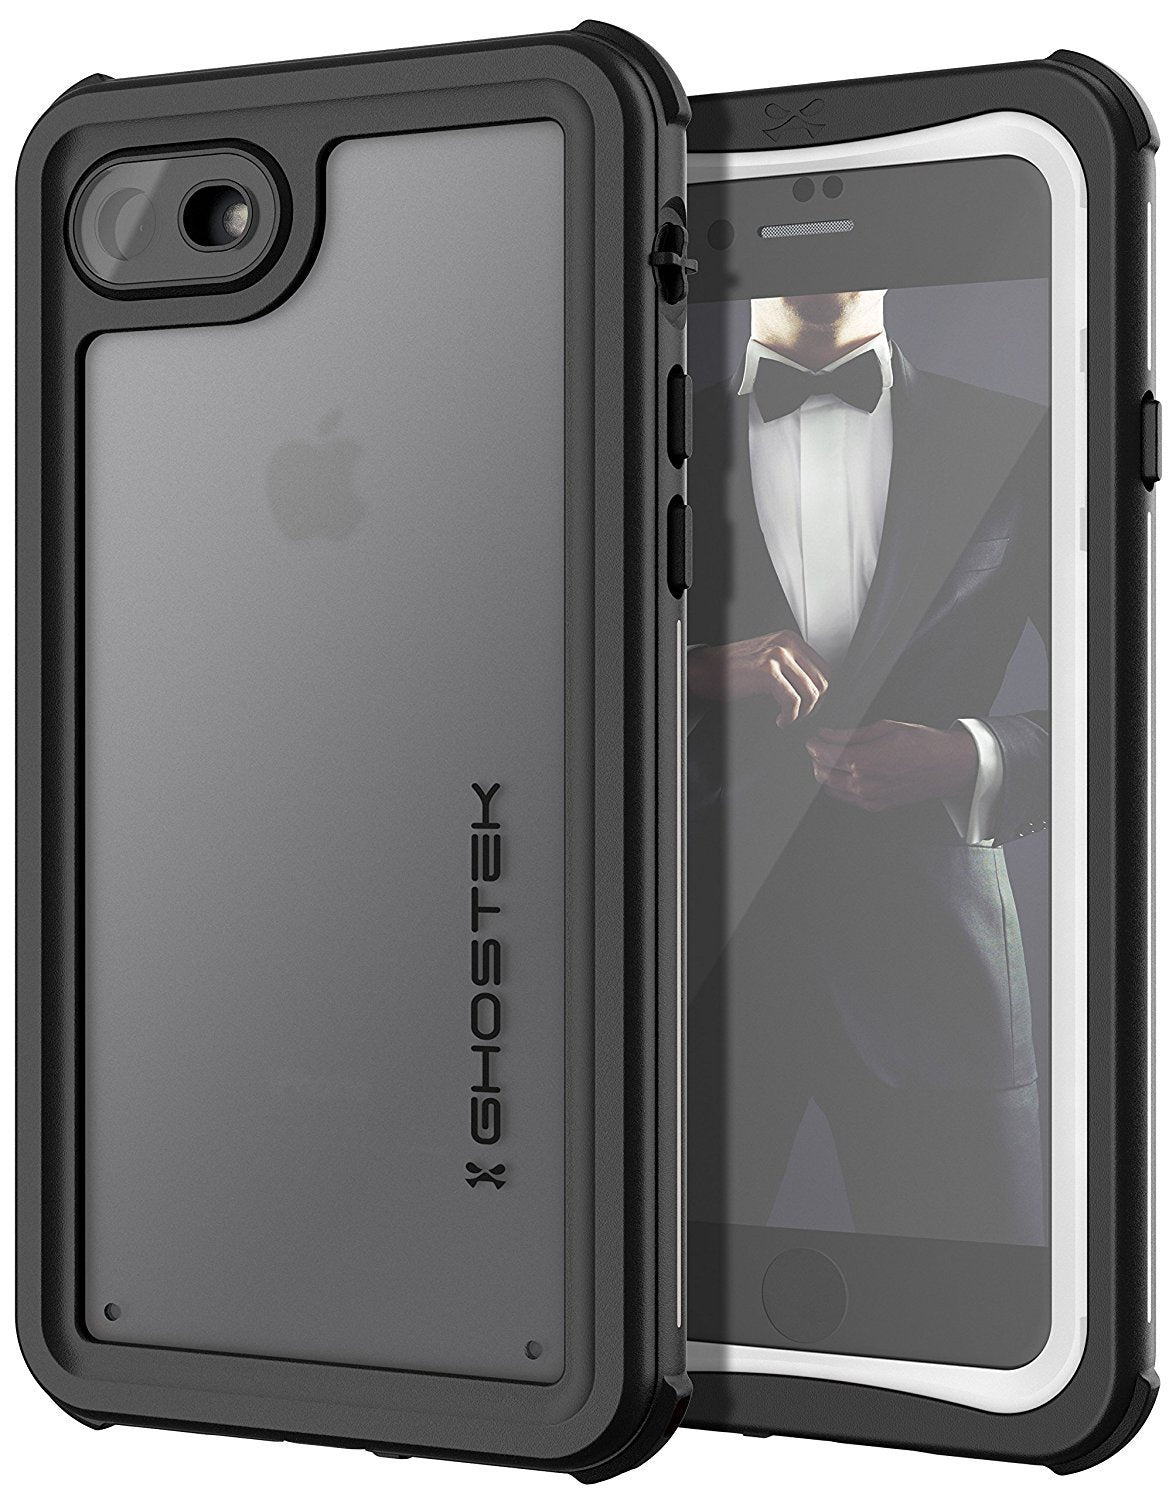 iPhone  7  Waterproof Case, Ghostek Nautical Series for iPhone  7  | Slim Underwater Protection | Adventure Duty | Ultra Fit | Swimming (White)